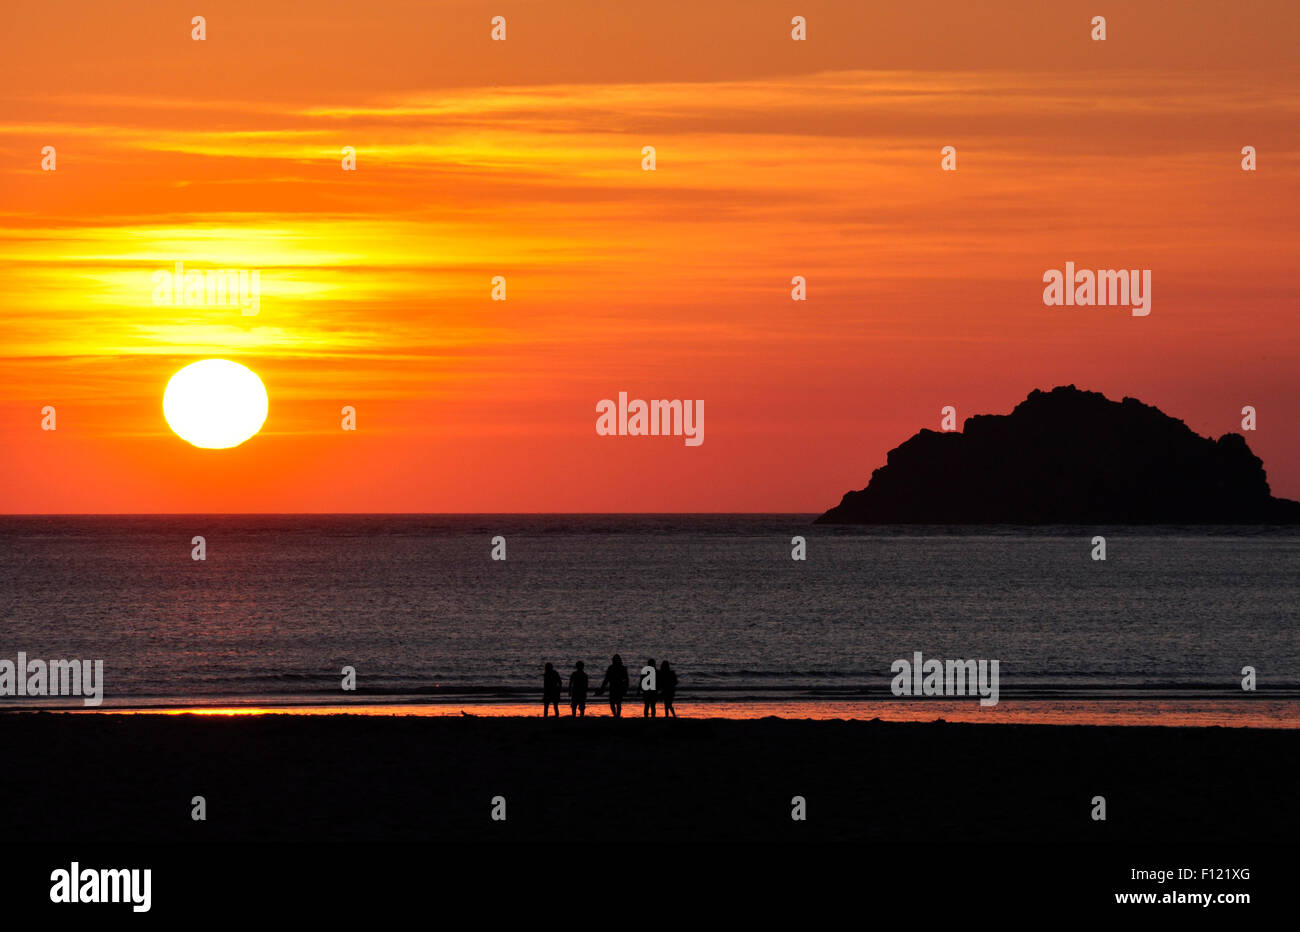 North Cornwall - sun setting over sea - beach figures in dark silhouette - off shore island outline - orange - red - gold sky Stock Photo